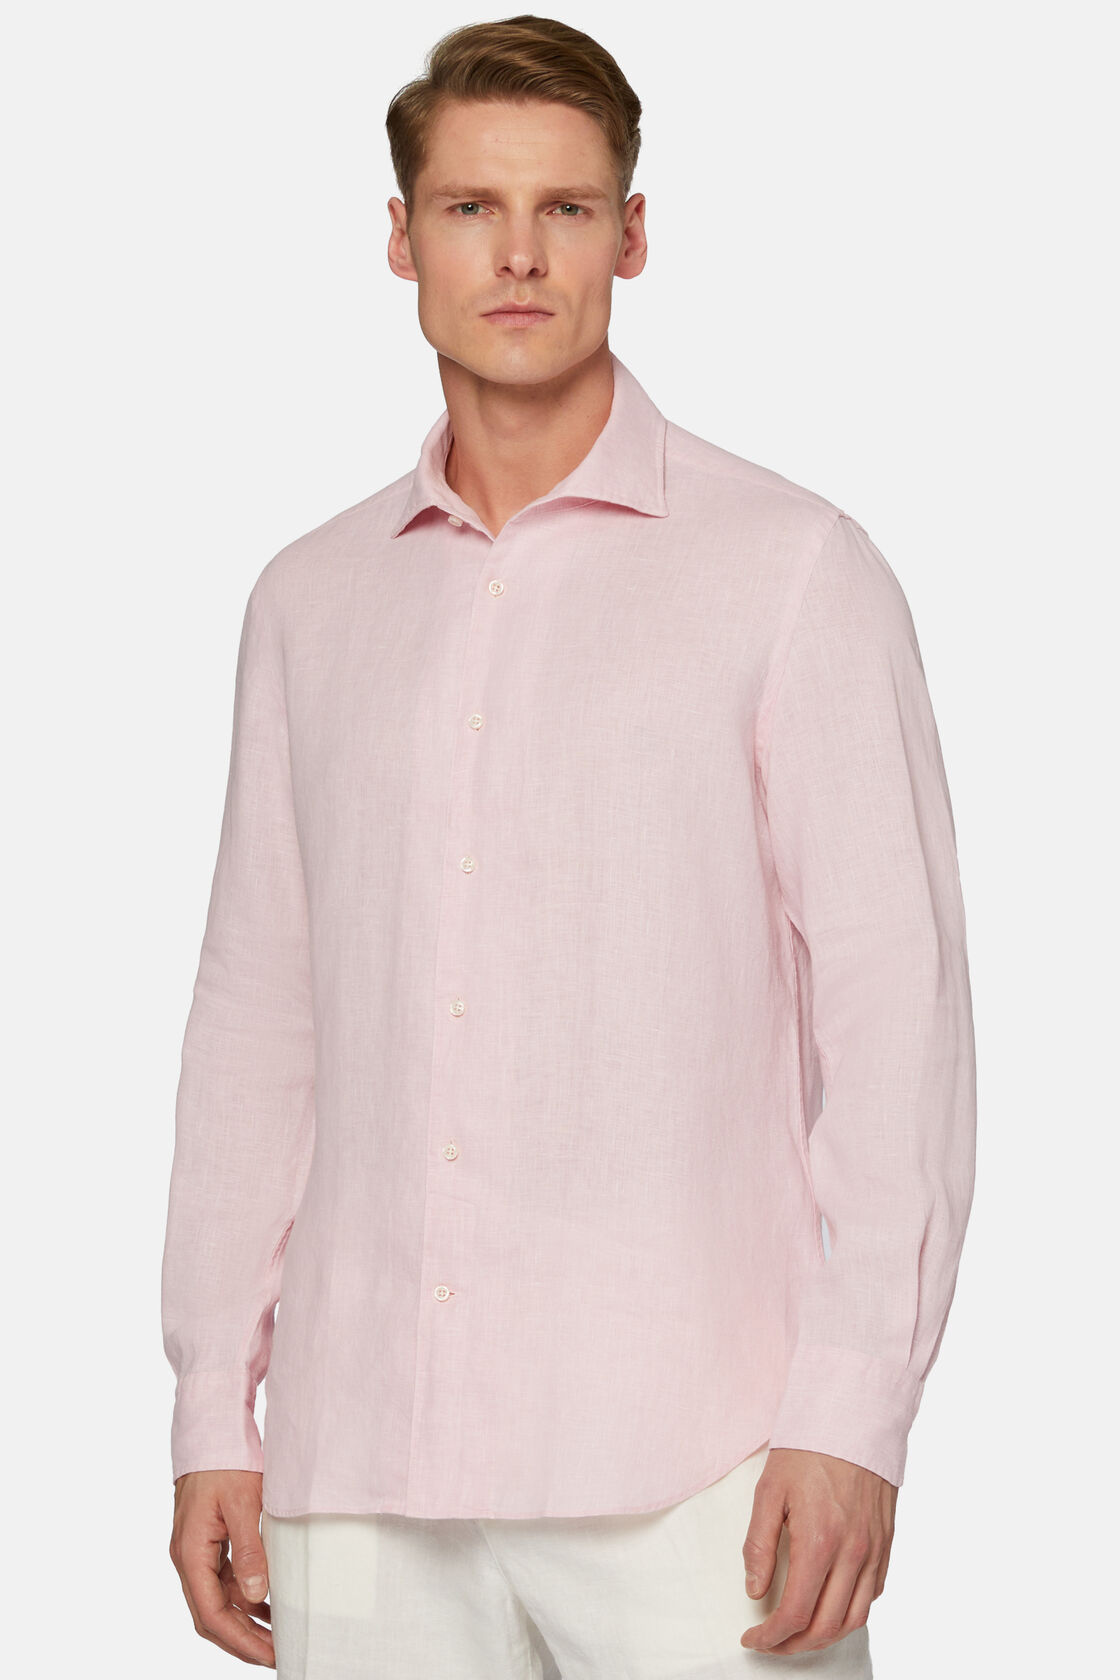 Camisa de linho cor de rosa de ajuste regular, Pink, hi-res